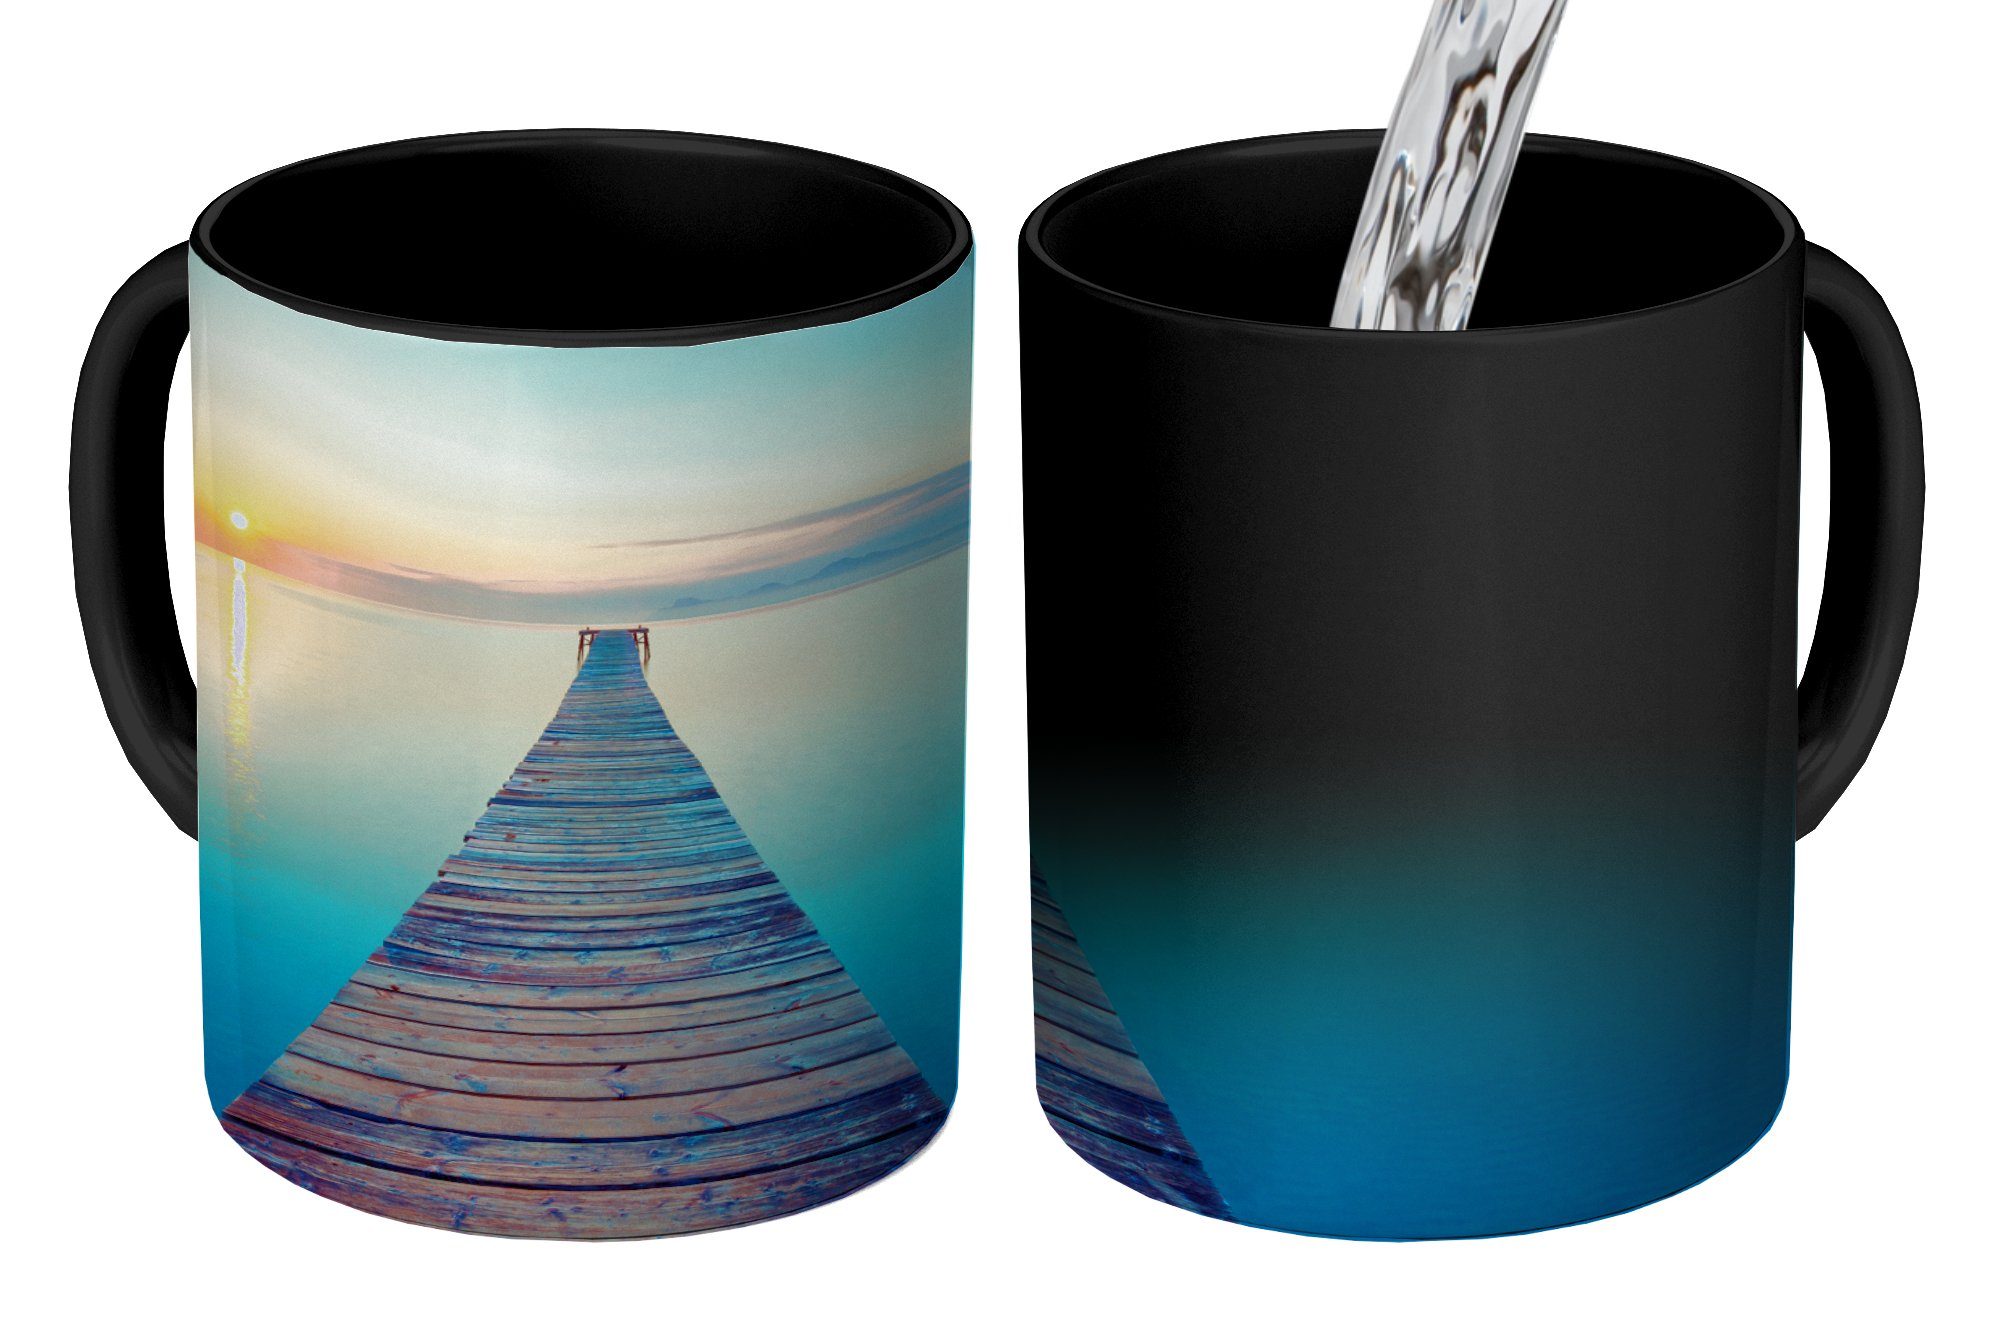 Verkauf heute MuchoWow Tasse Geschenk - Farbwechsel, - Zaubertasse, Meer Sonnenuntergang Keramik, Steg, Teetasse, Kaffeetassen